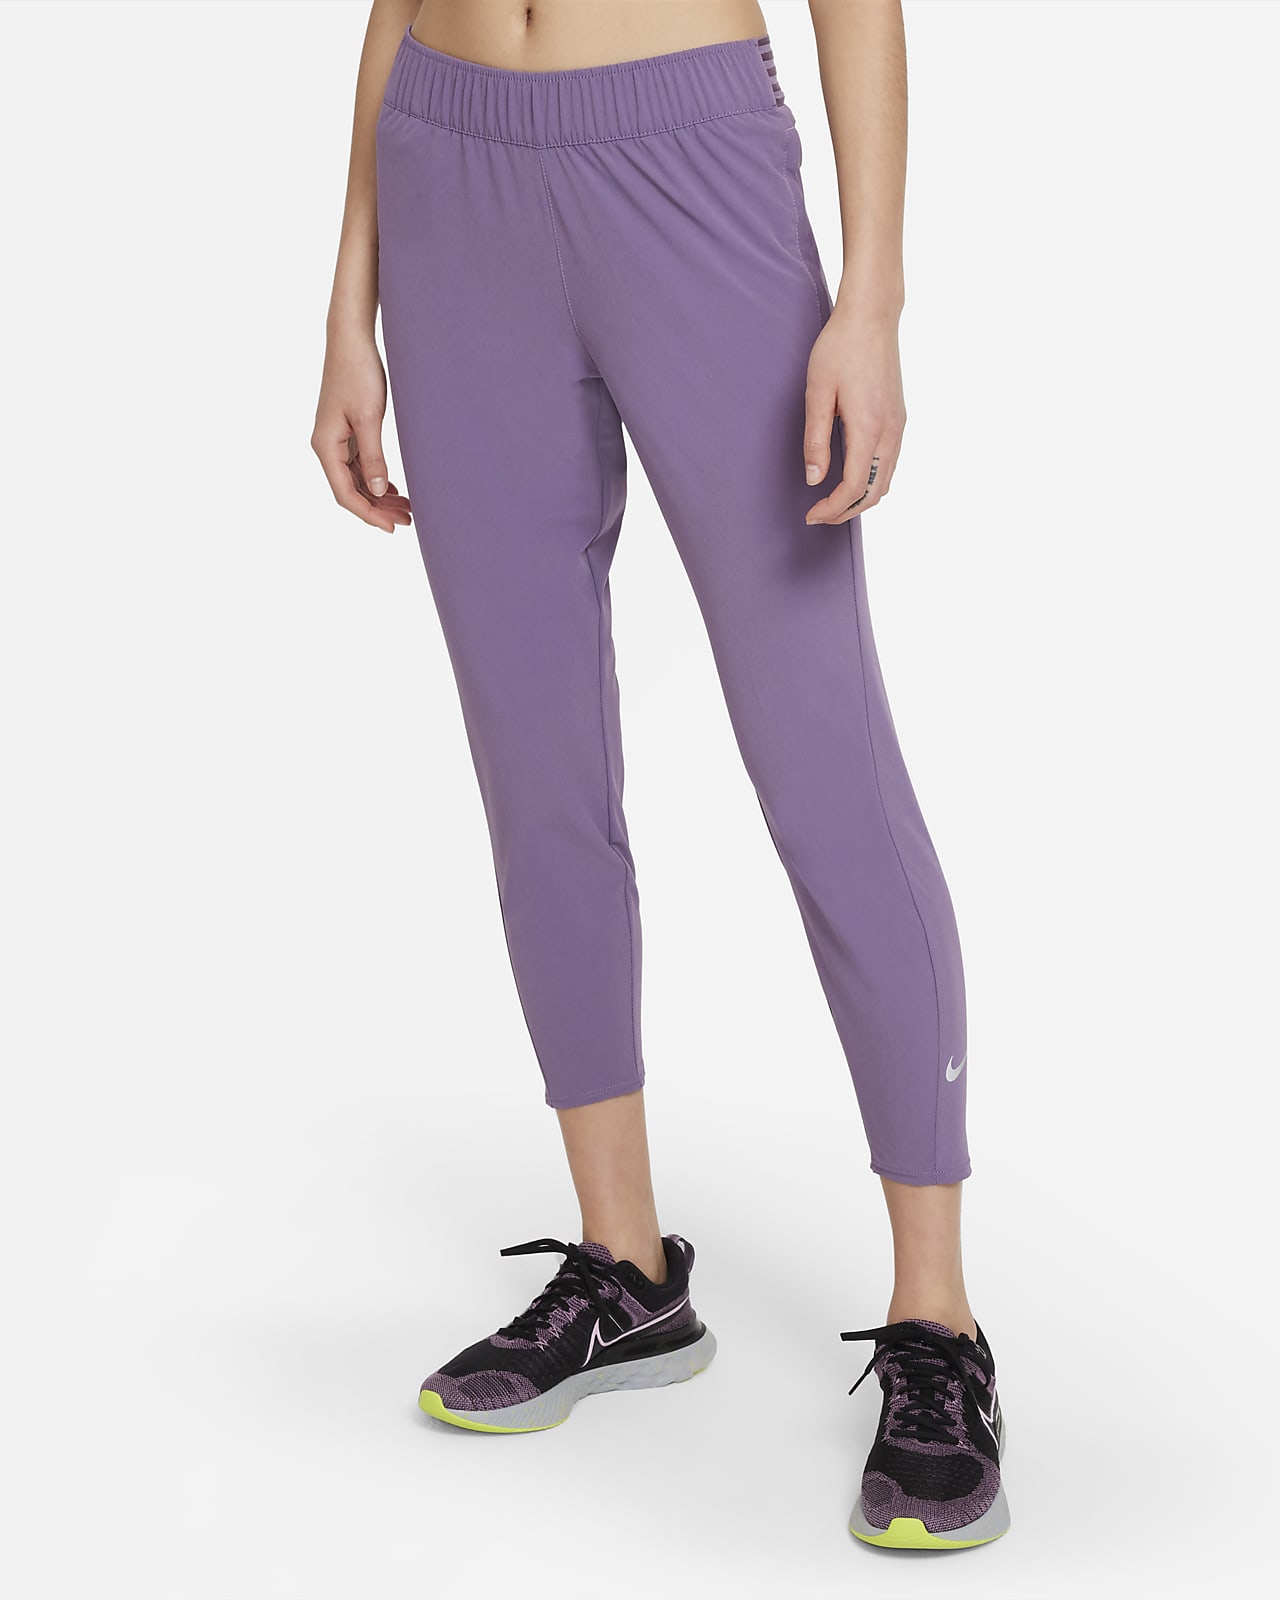 Nike Dri-Fit Essential Running Pants - Running trousers Women's